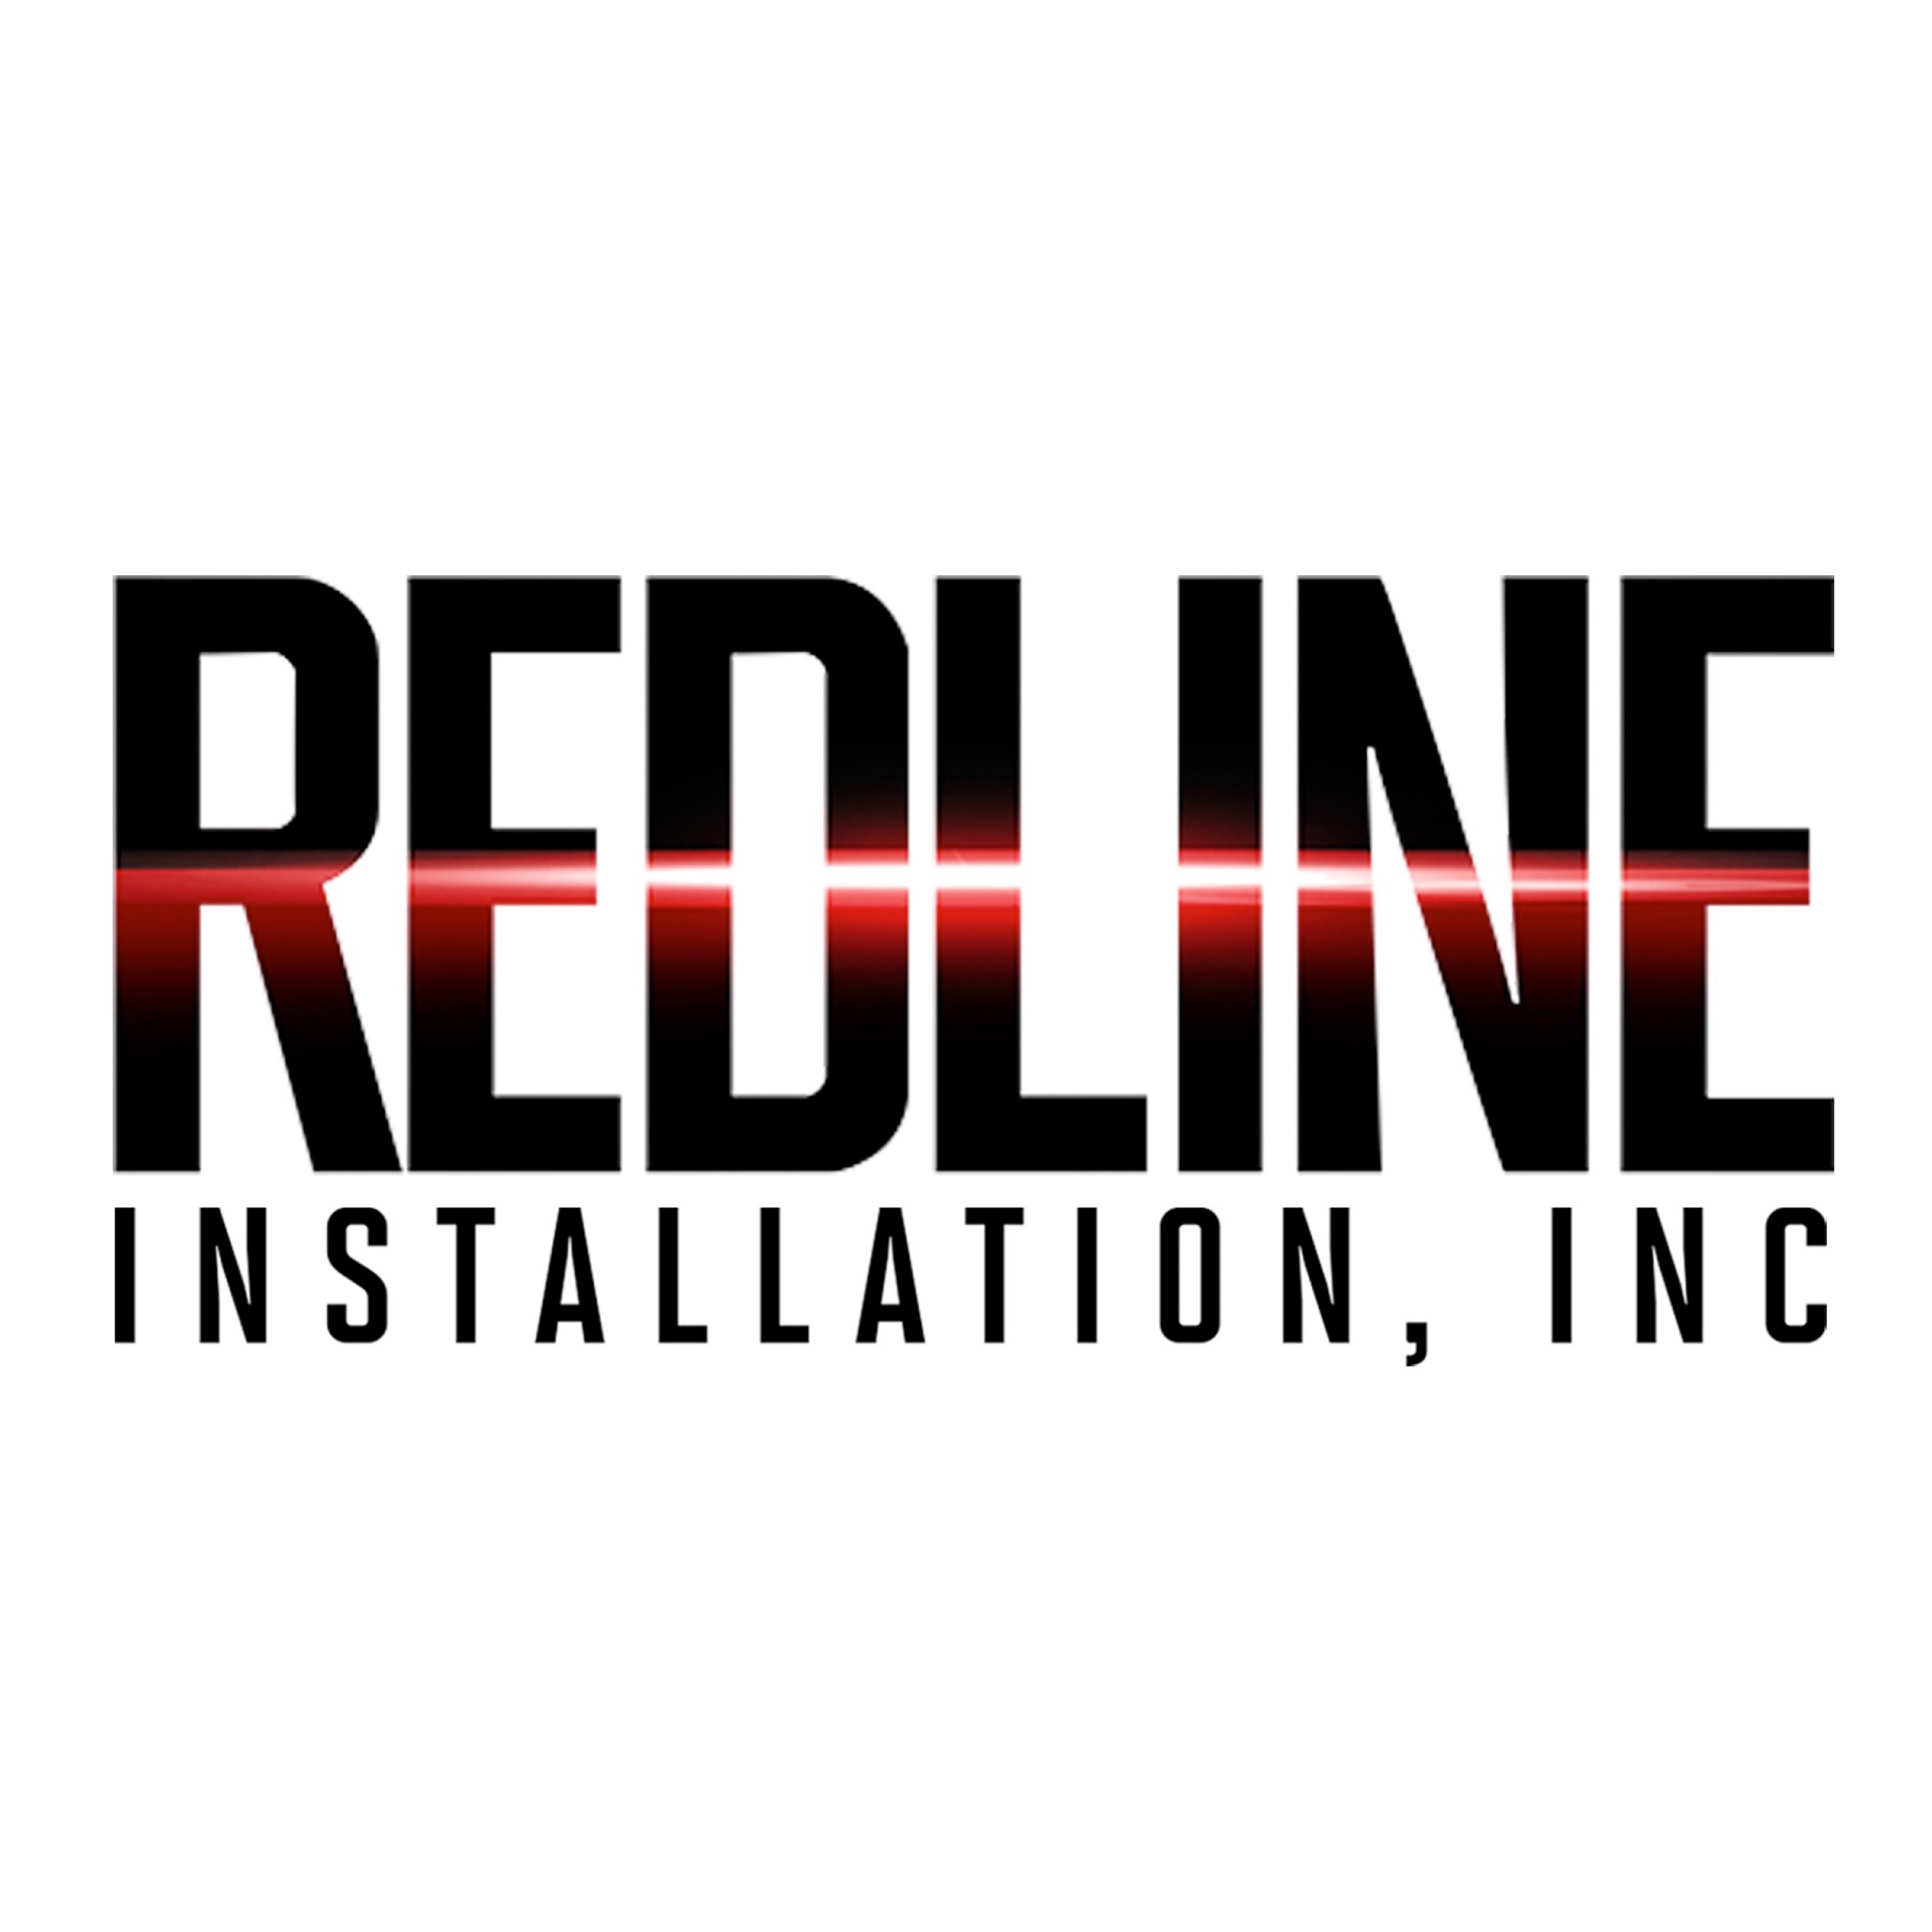 Redline Installation Inc. Logo